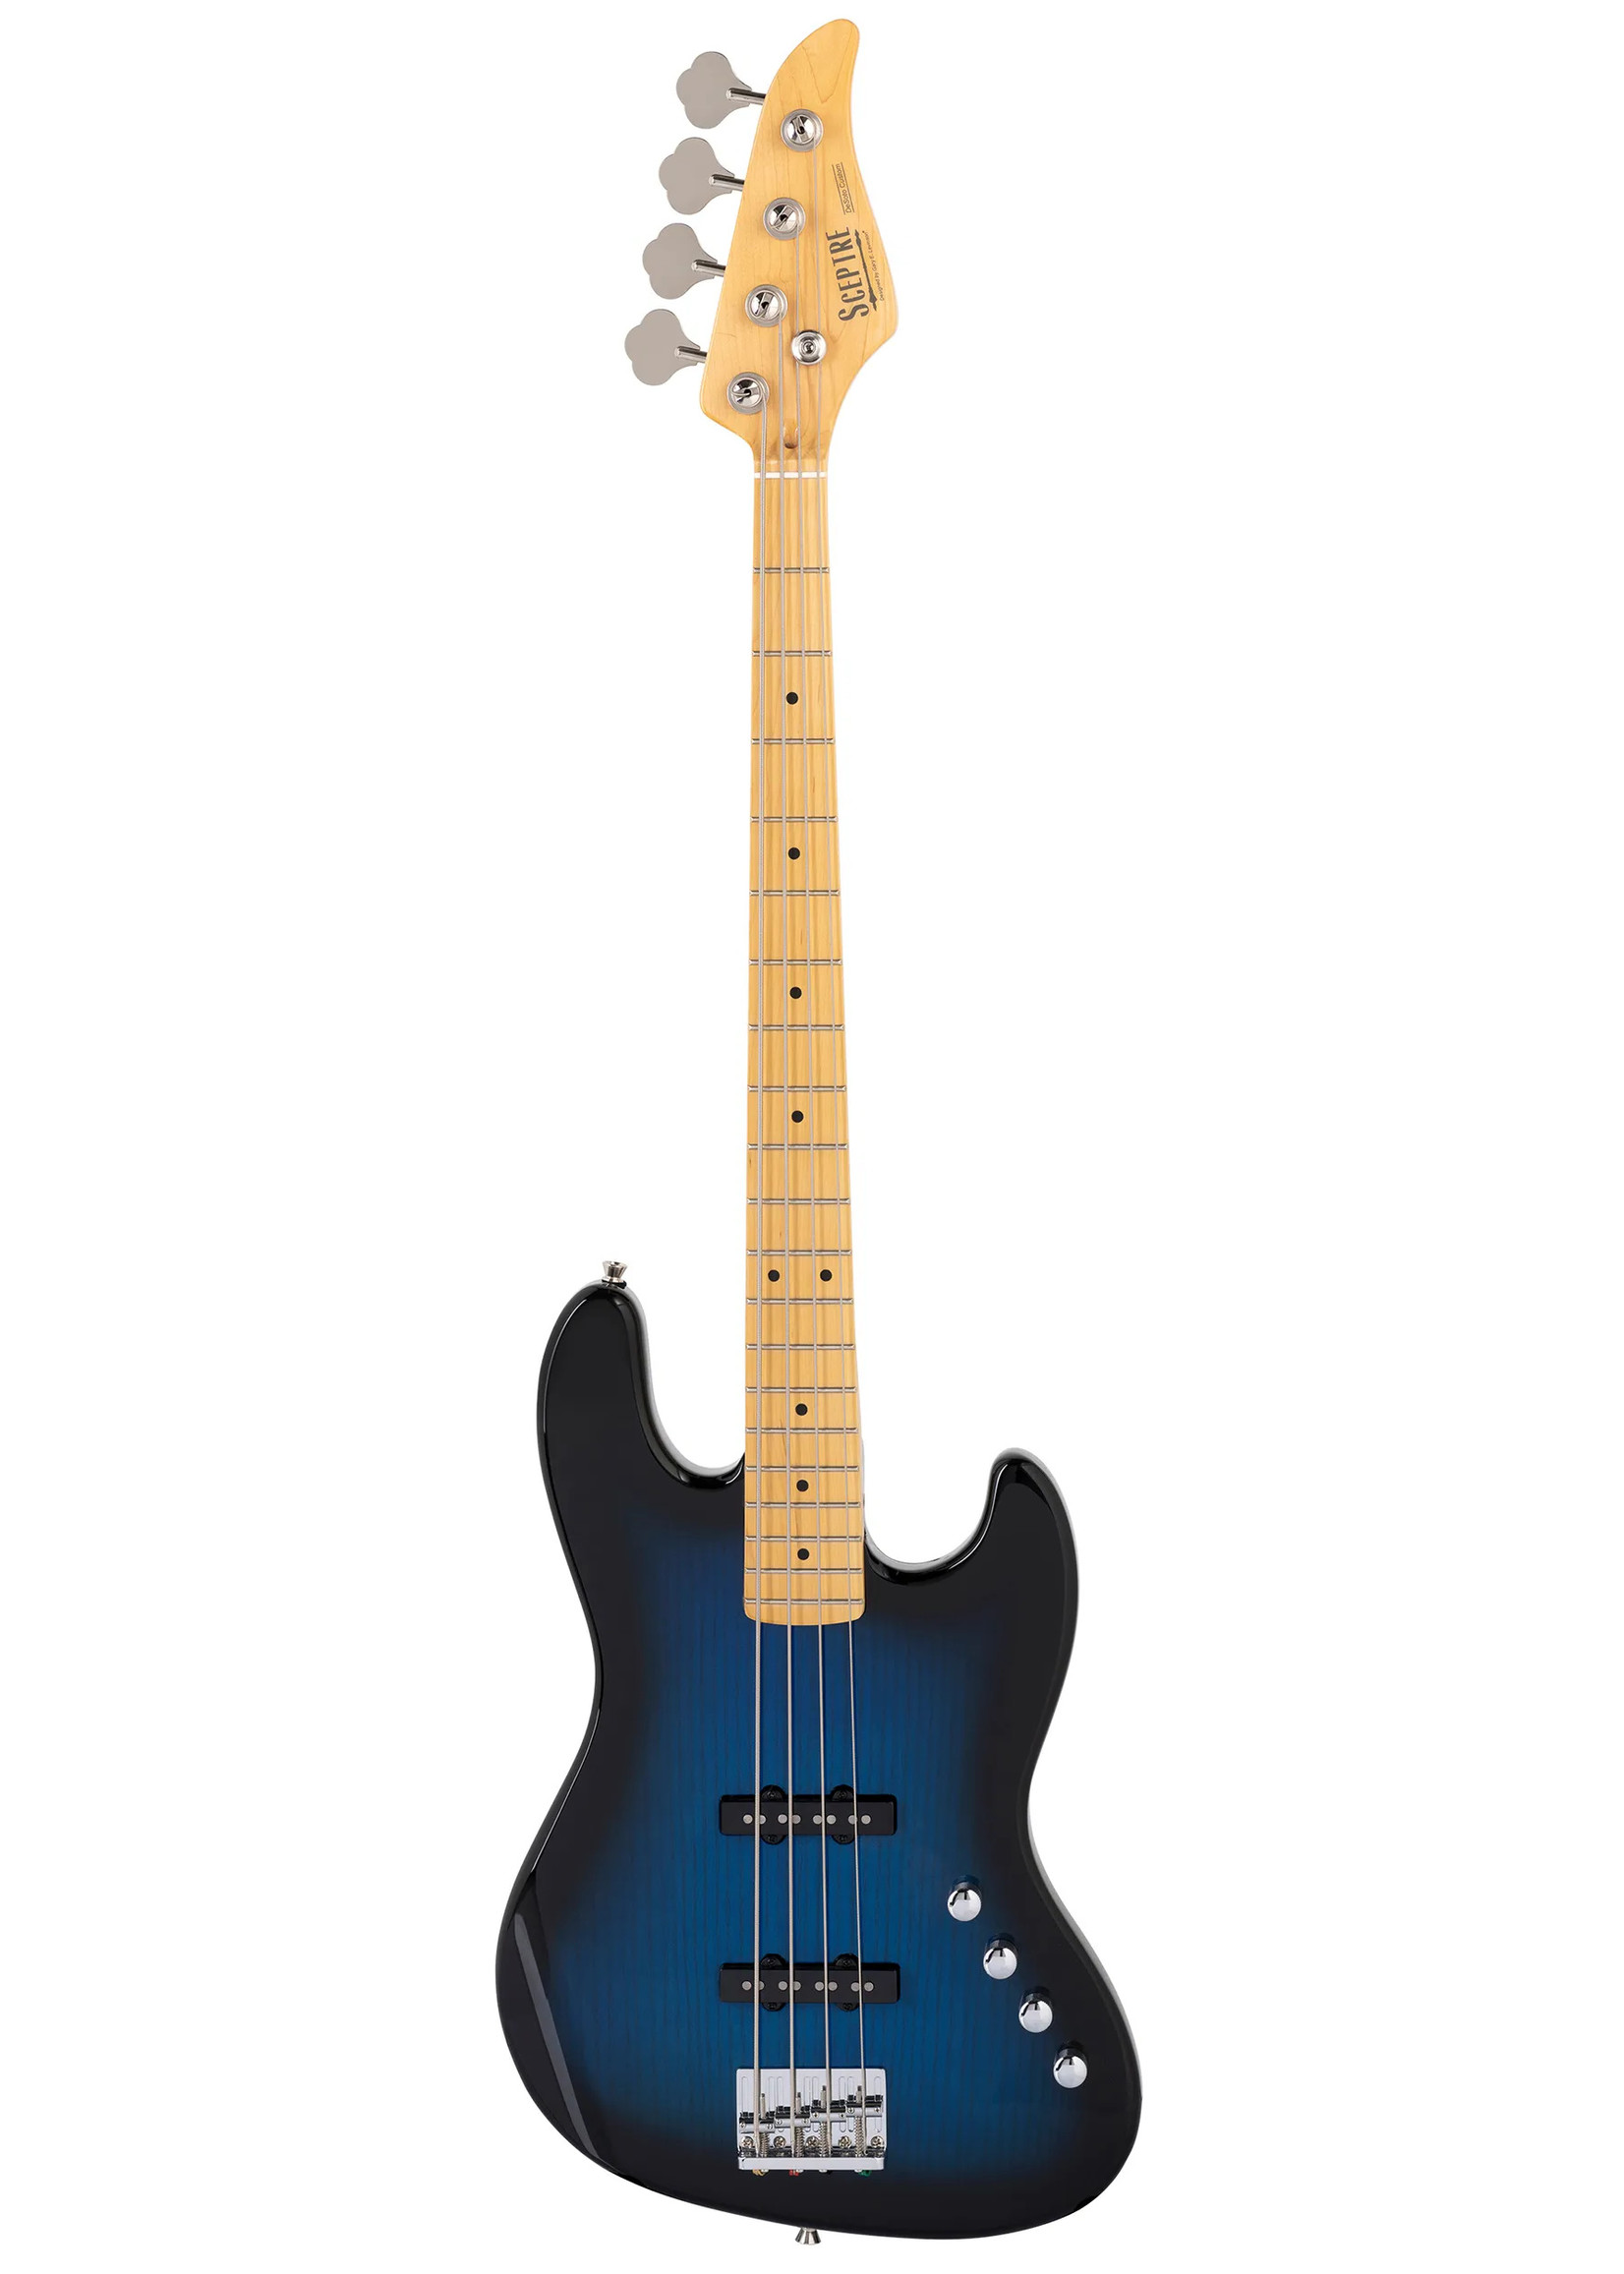 Sceptre Desoto Deluxe Bass Guitar - SD2 OB M